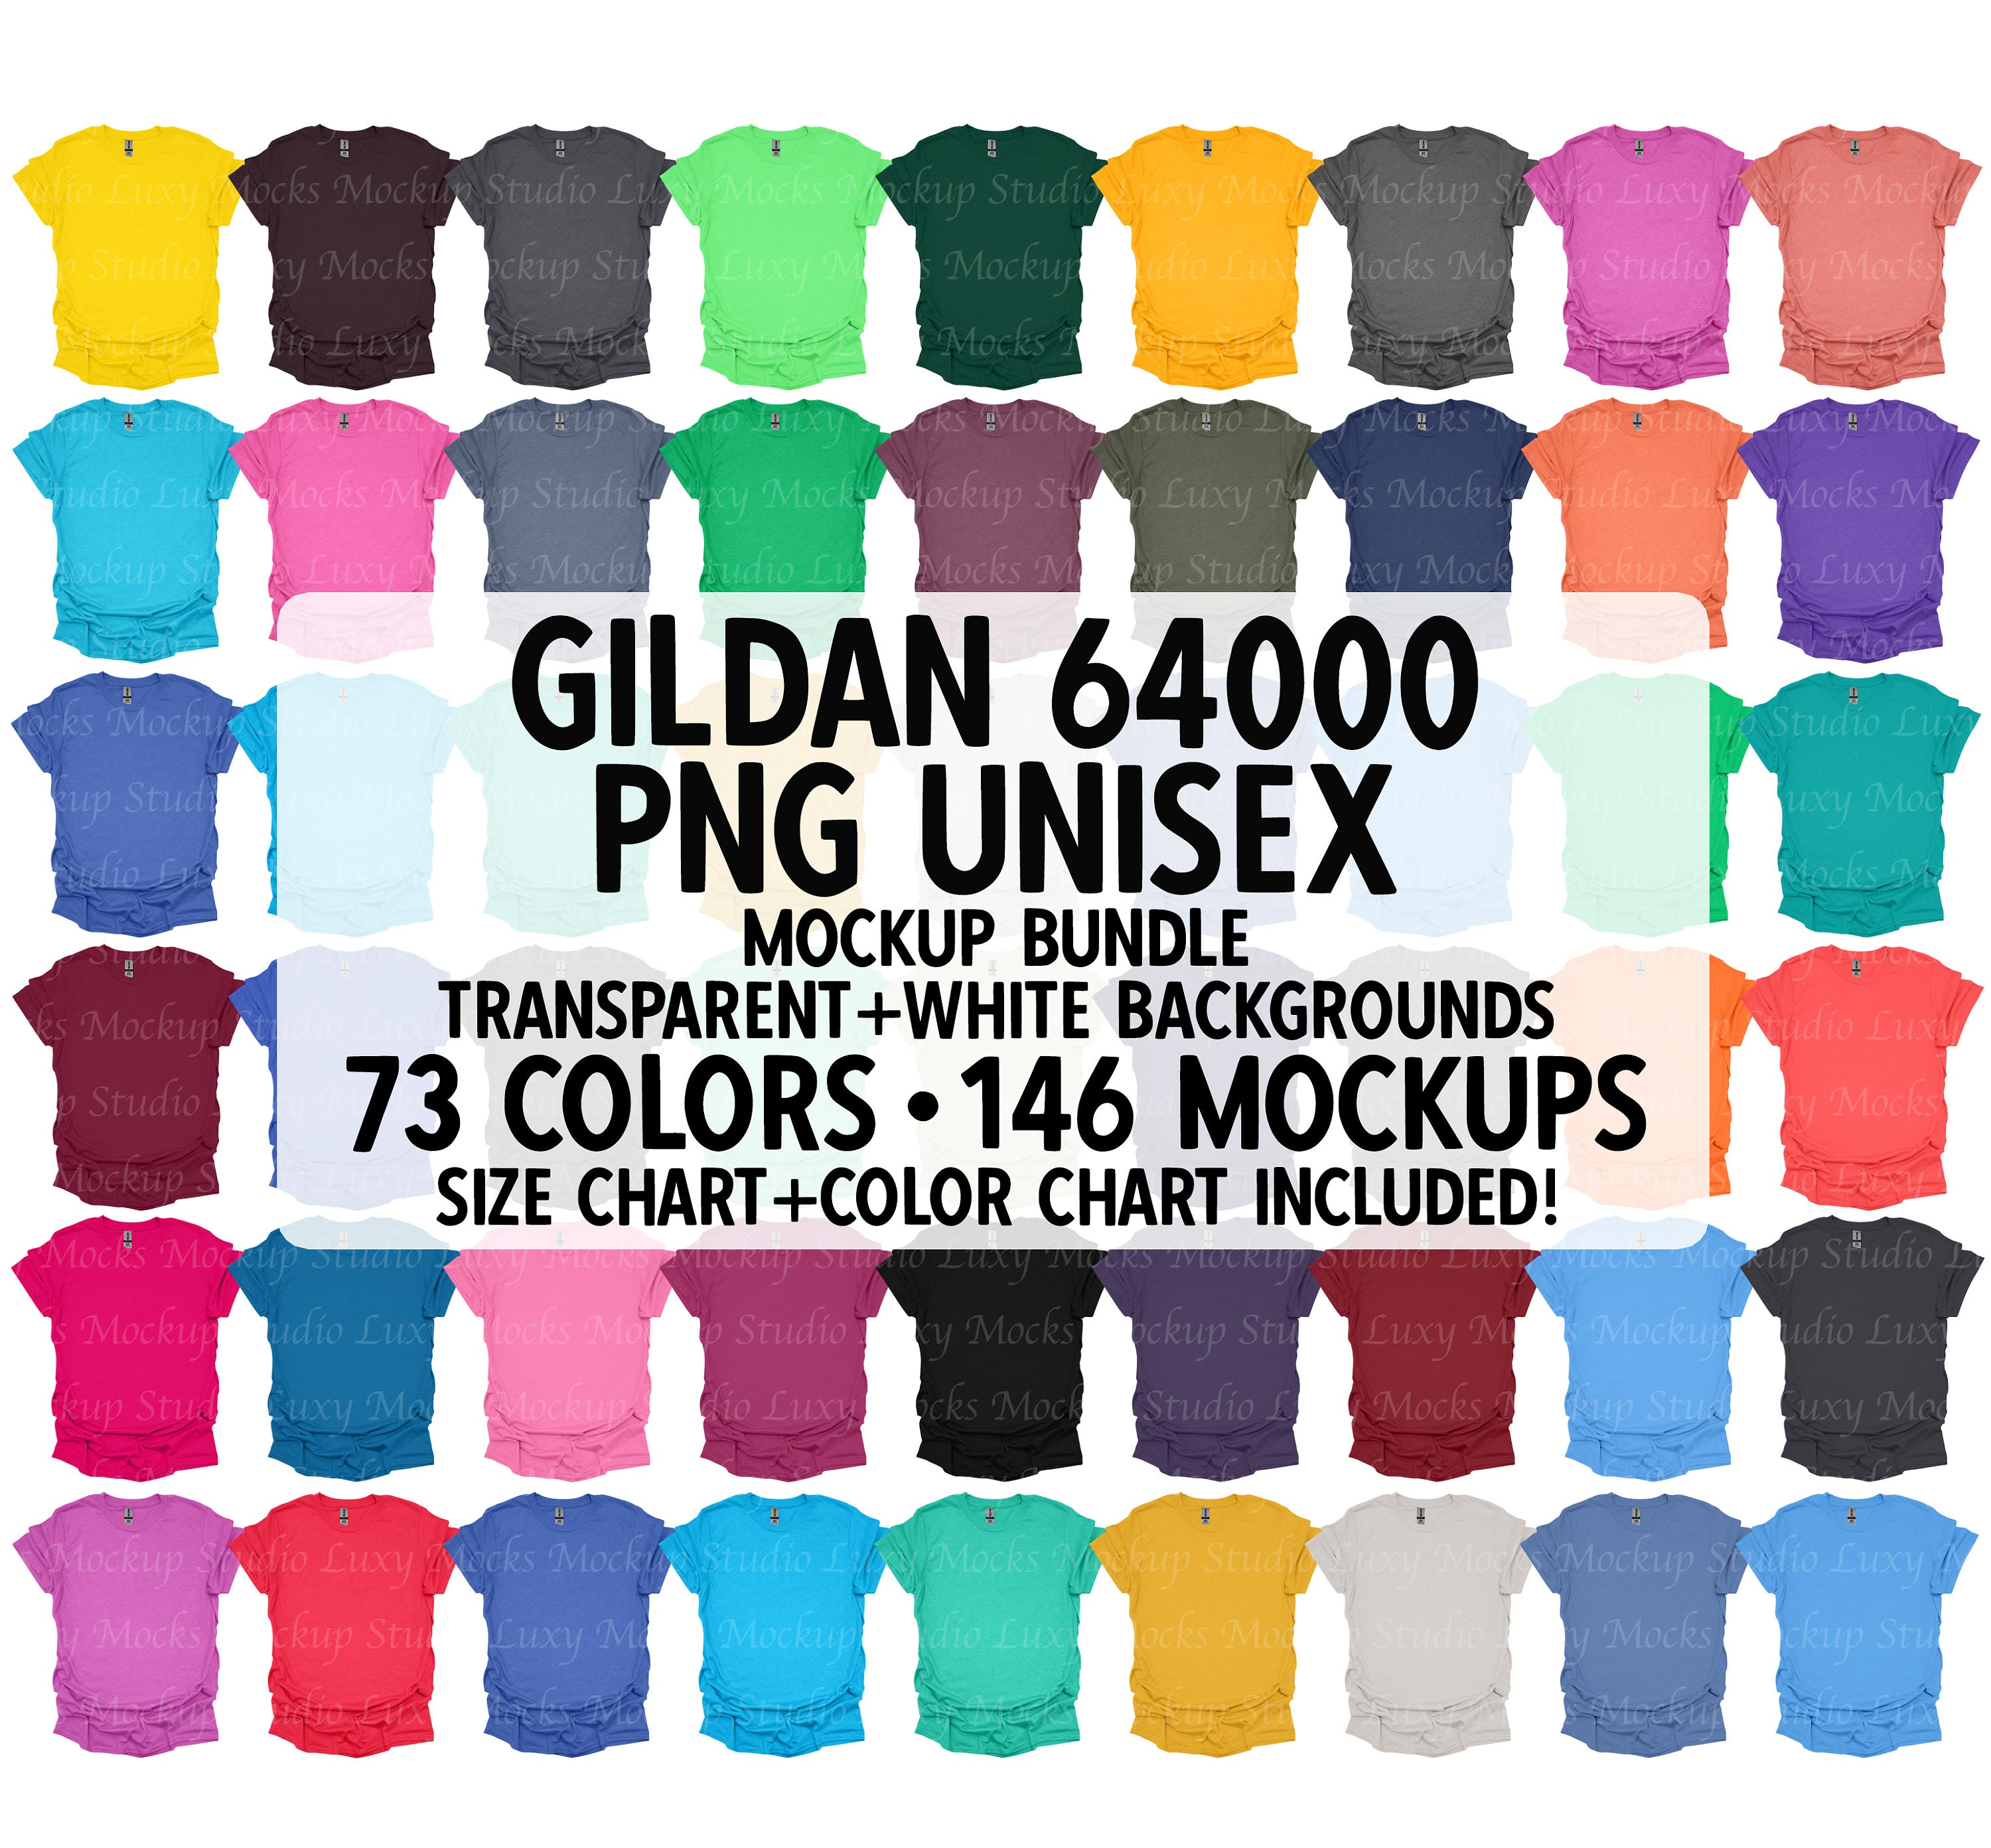 Gildan 64000 G640 Men's / Unisex Mockup Bundle PNG - Etsy